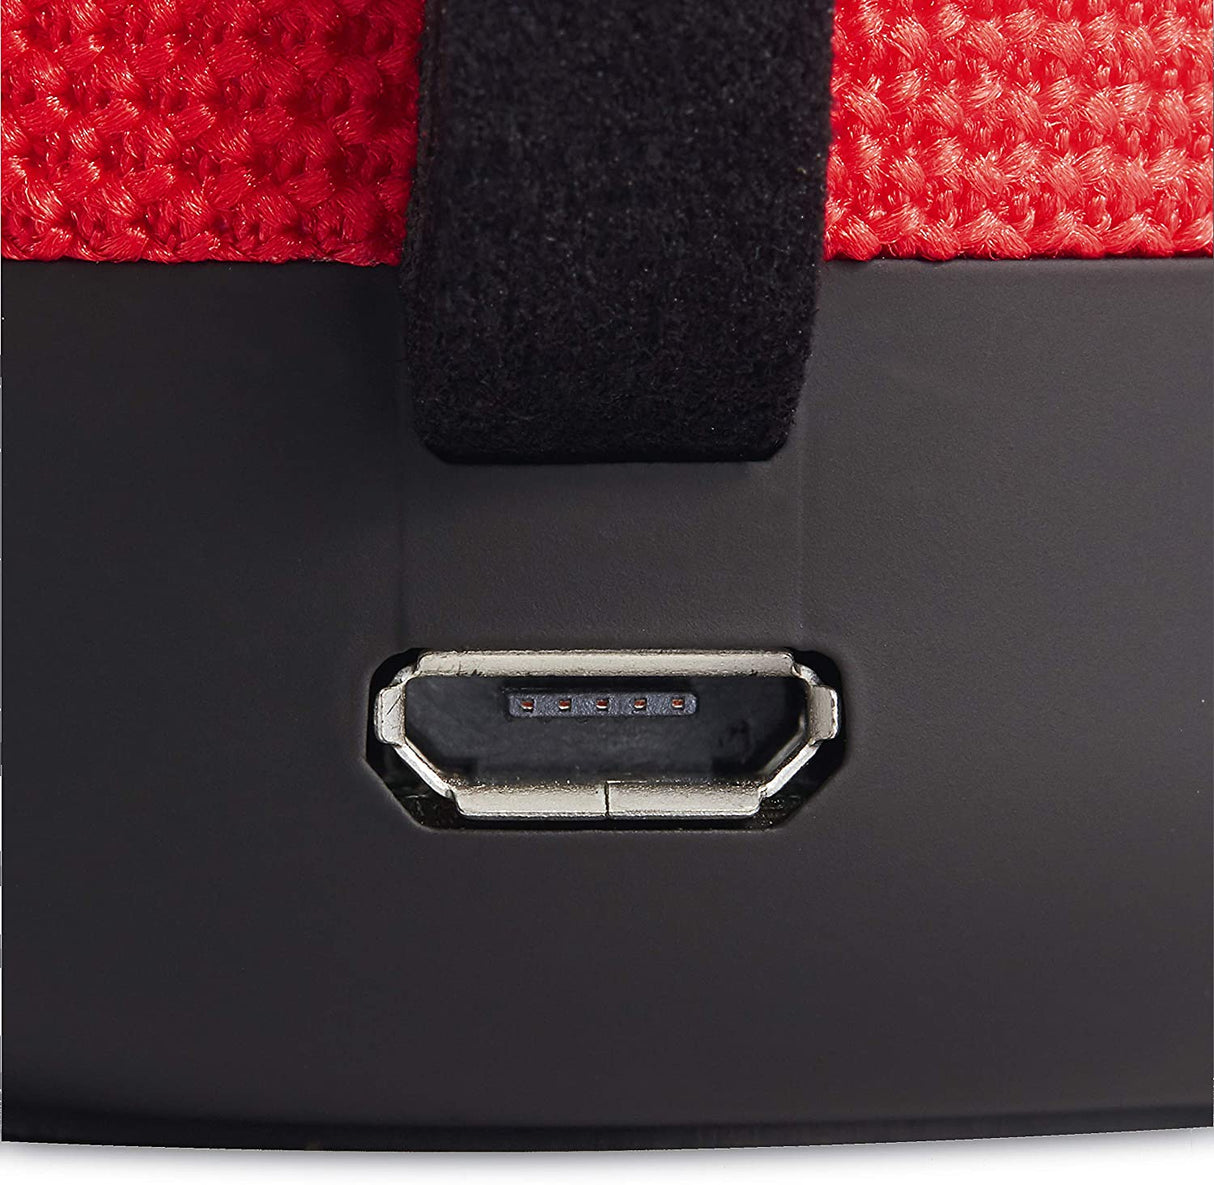 Verbatim Wireless Mini BluetoothSpeaker – Red